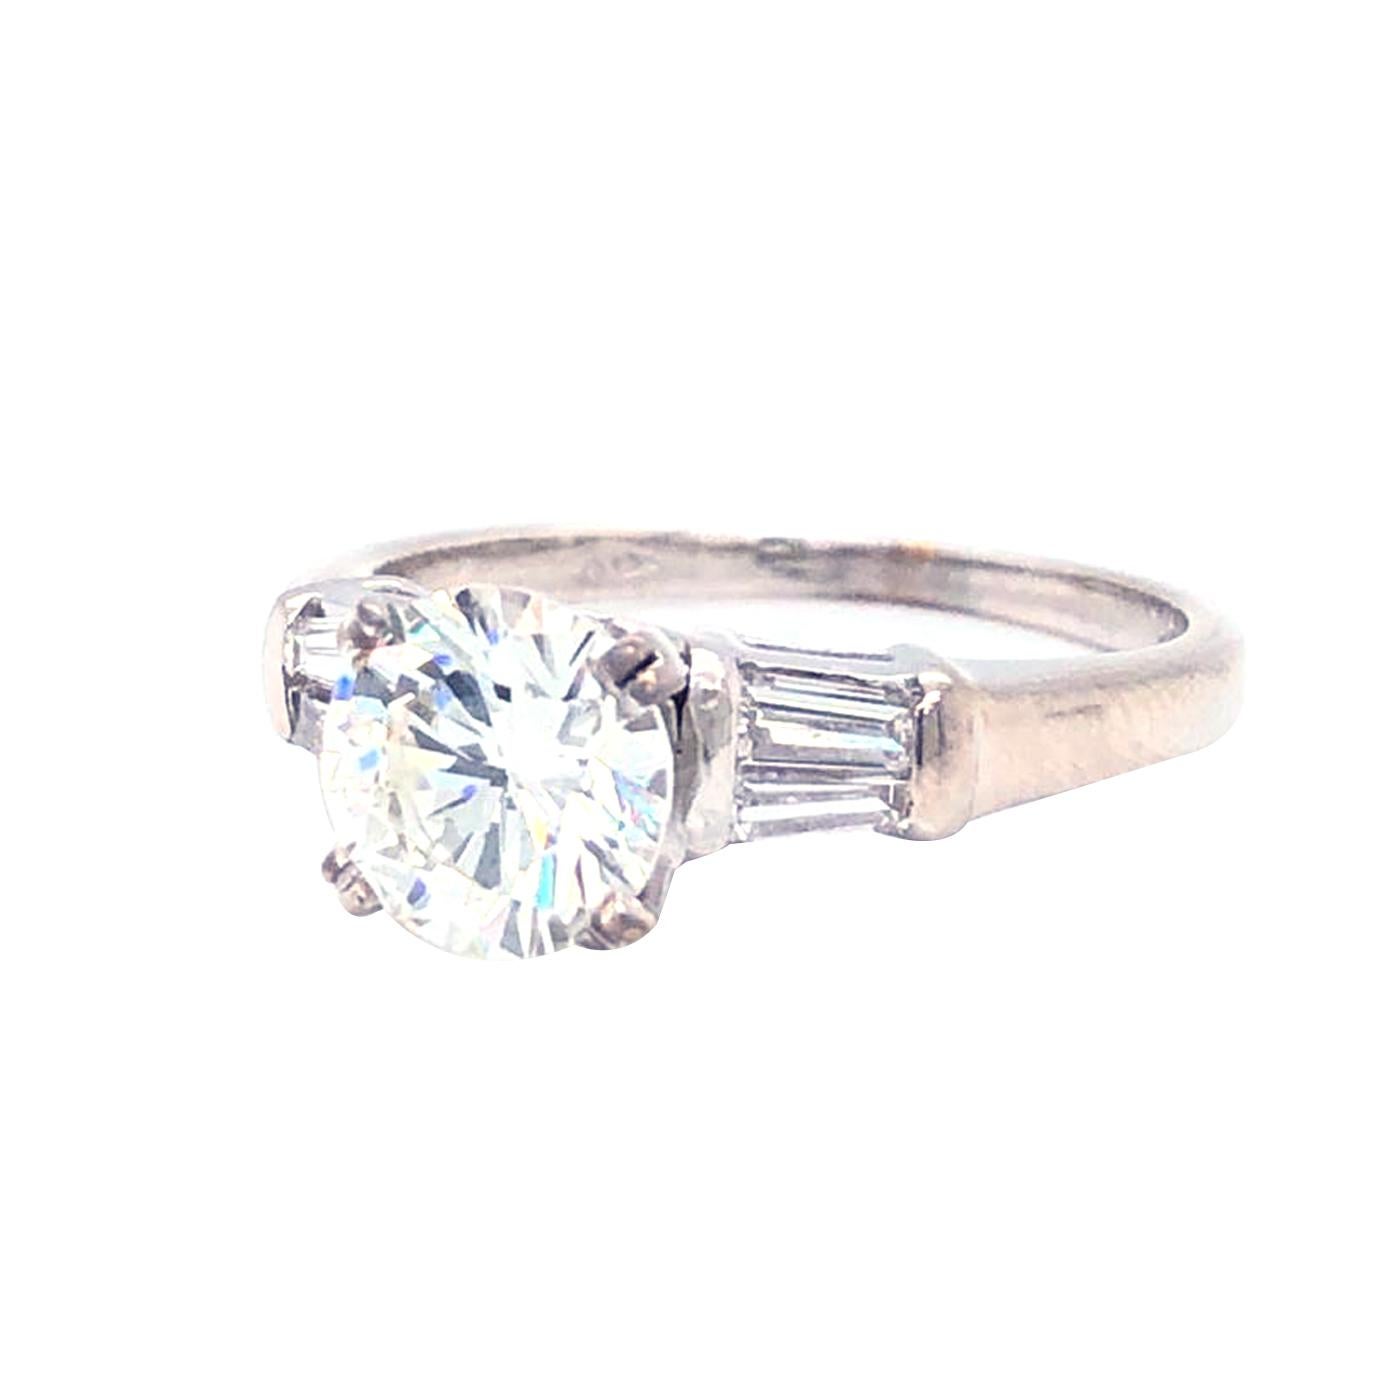 120 carat diamond ring